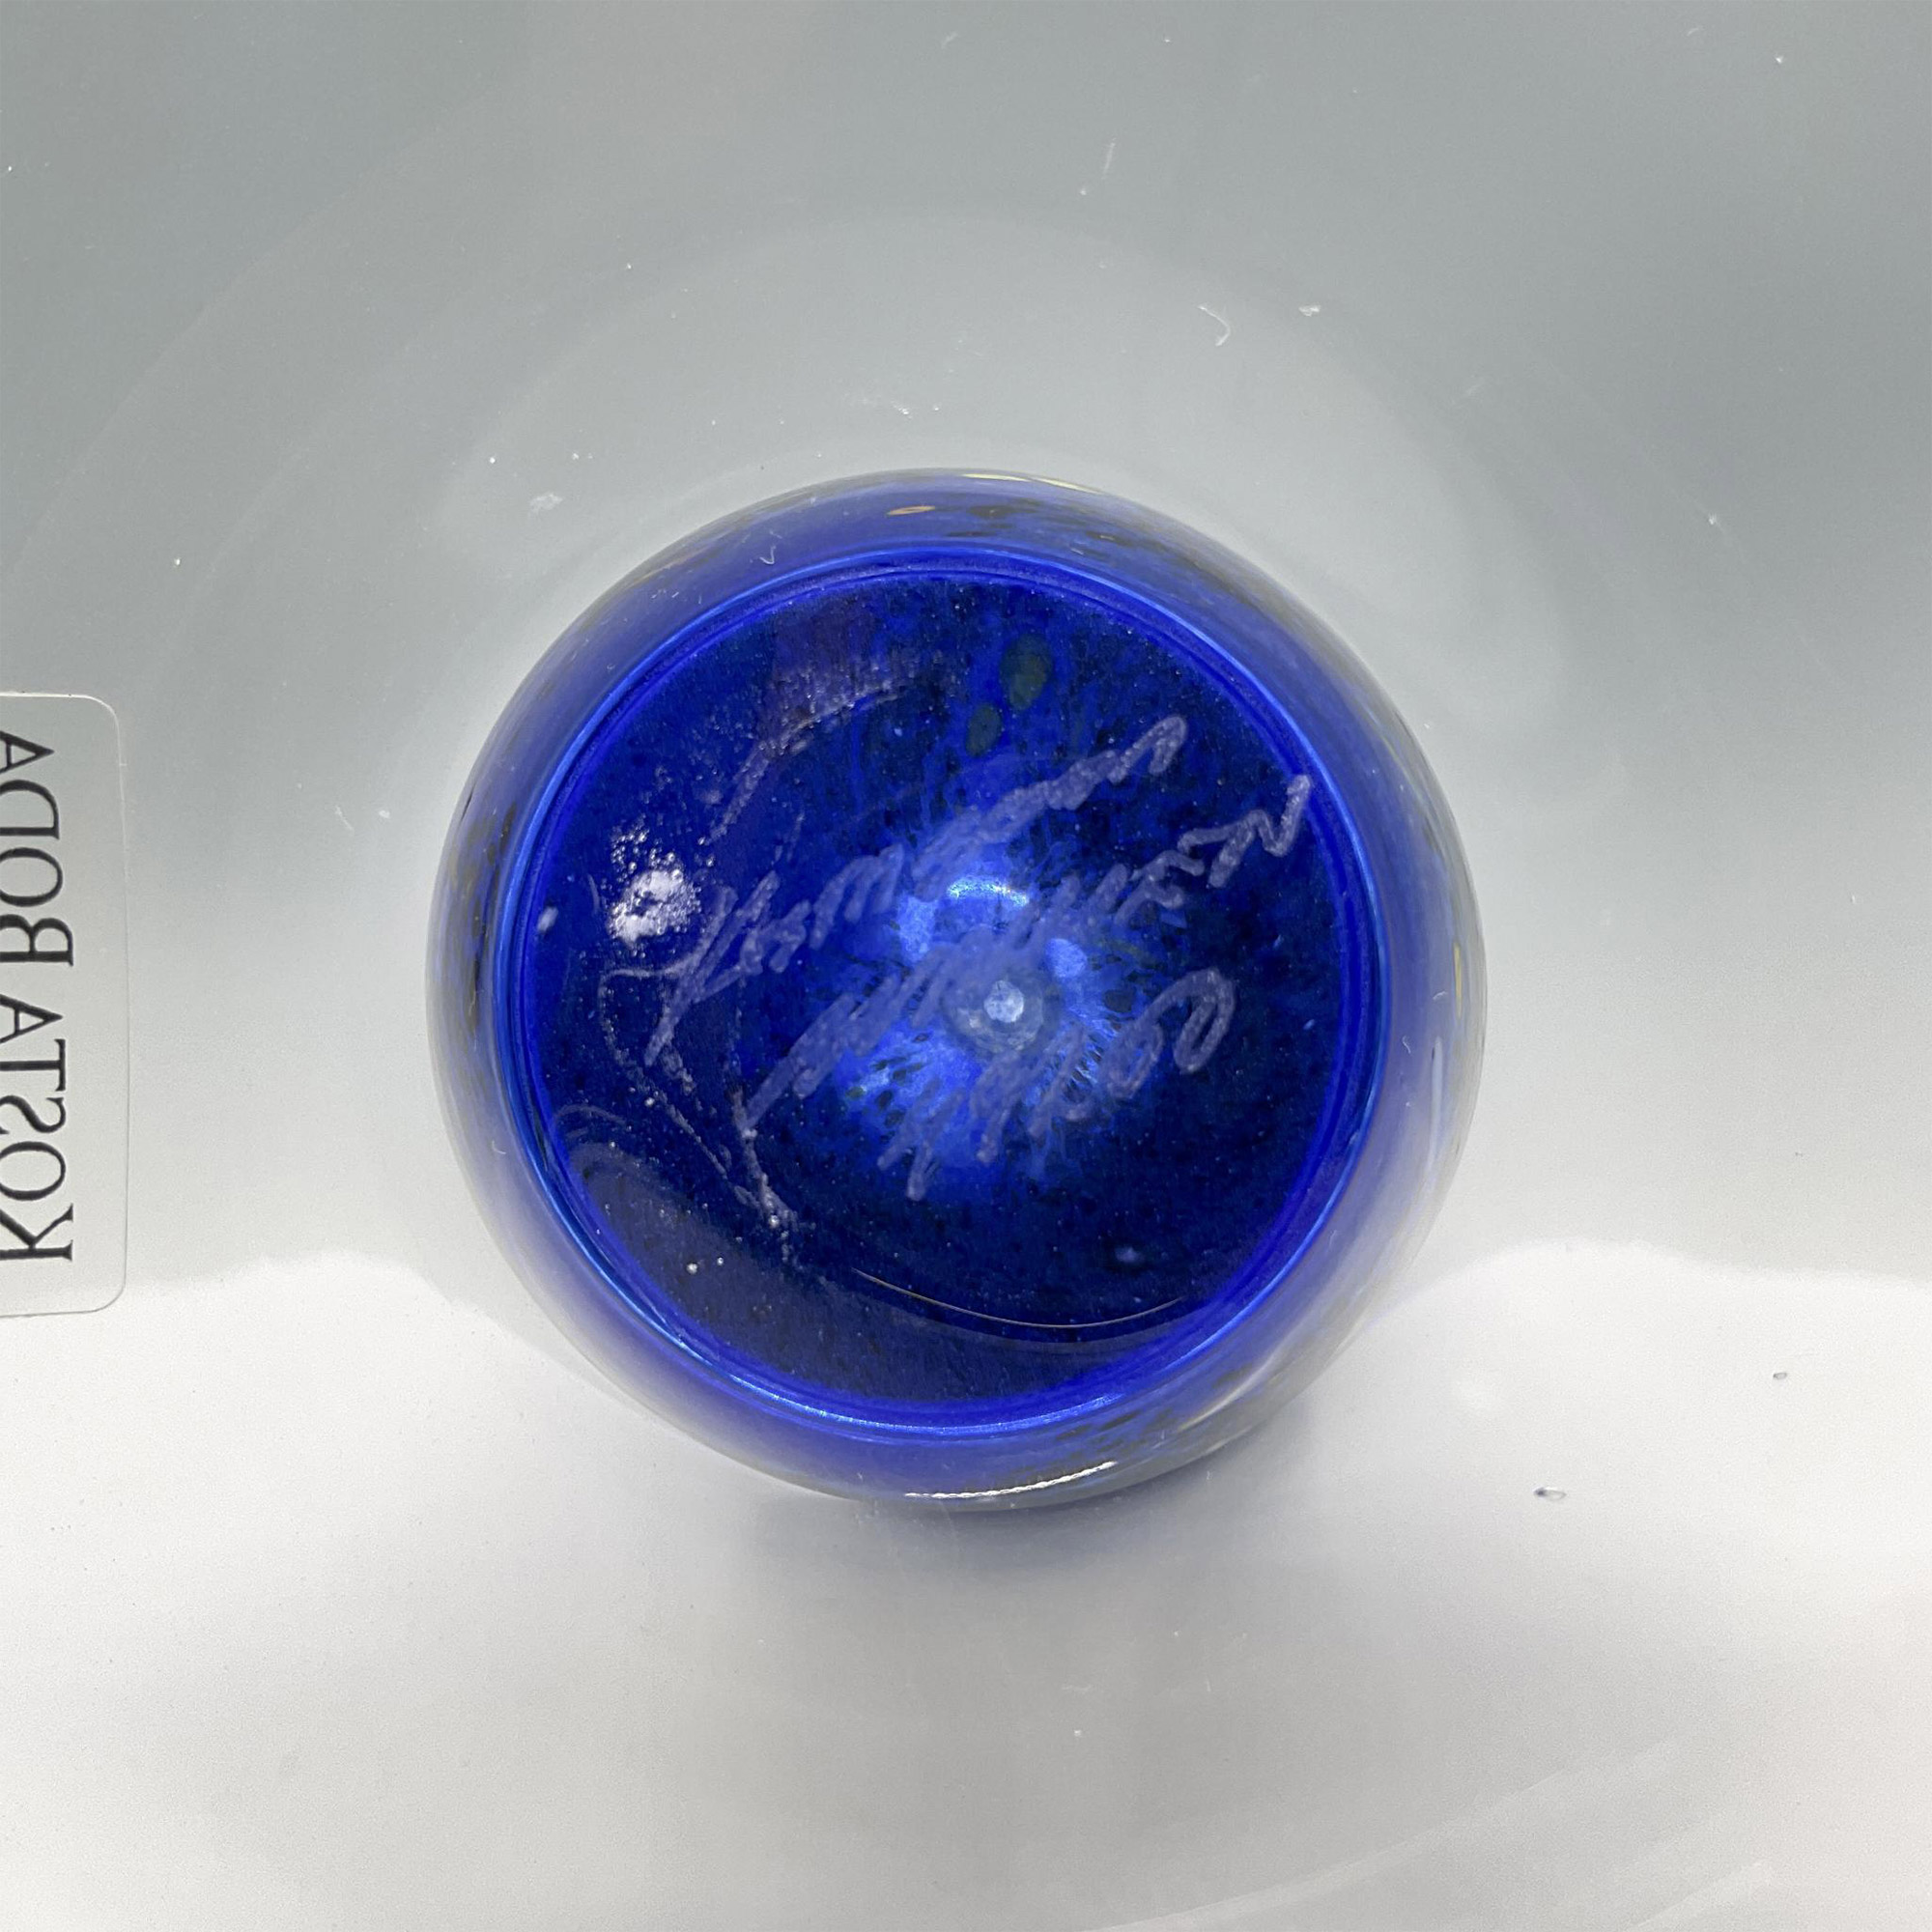 Kosta Boda Crystal Vase, Satellite Blue 49250 - Image 4 of 4